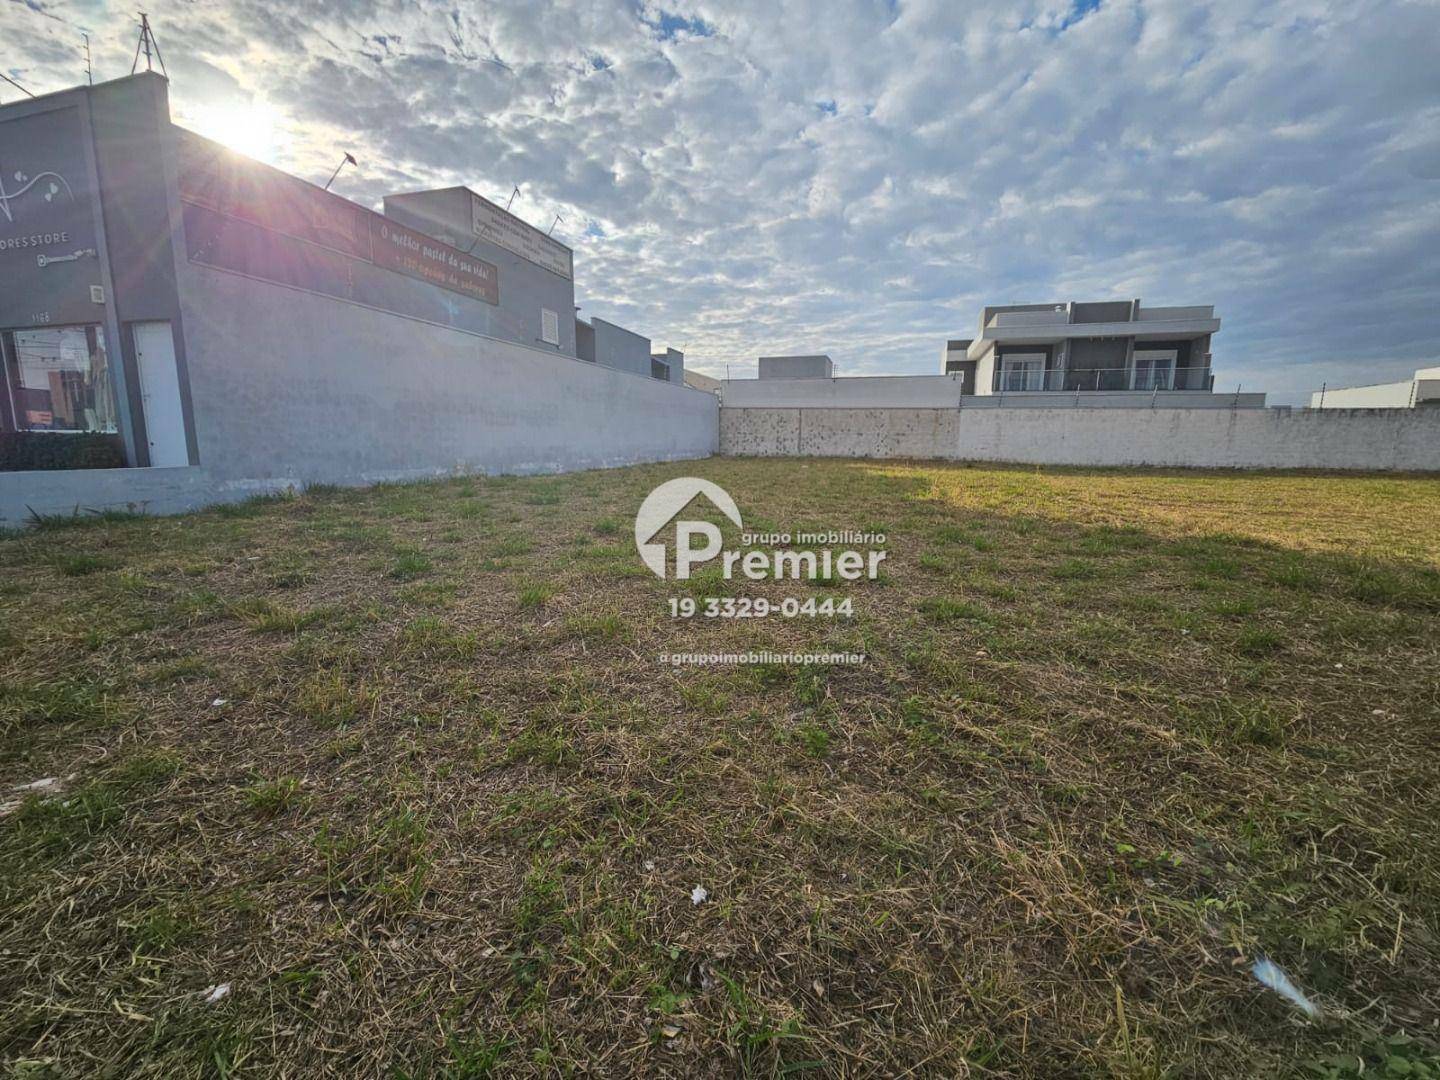 Terreno em Jardim Esplanada, Indaiatuba/SP de 0m² à venda por R$ 1.199.000,00